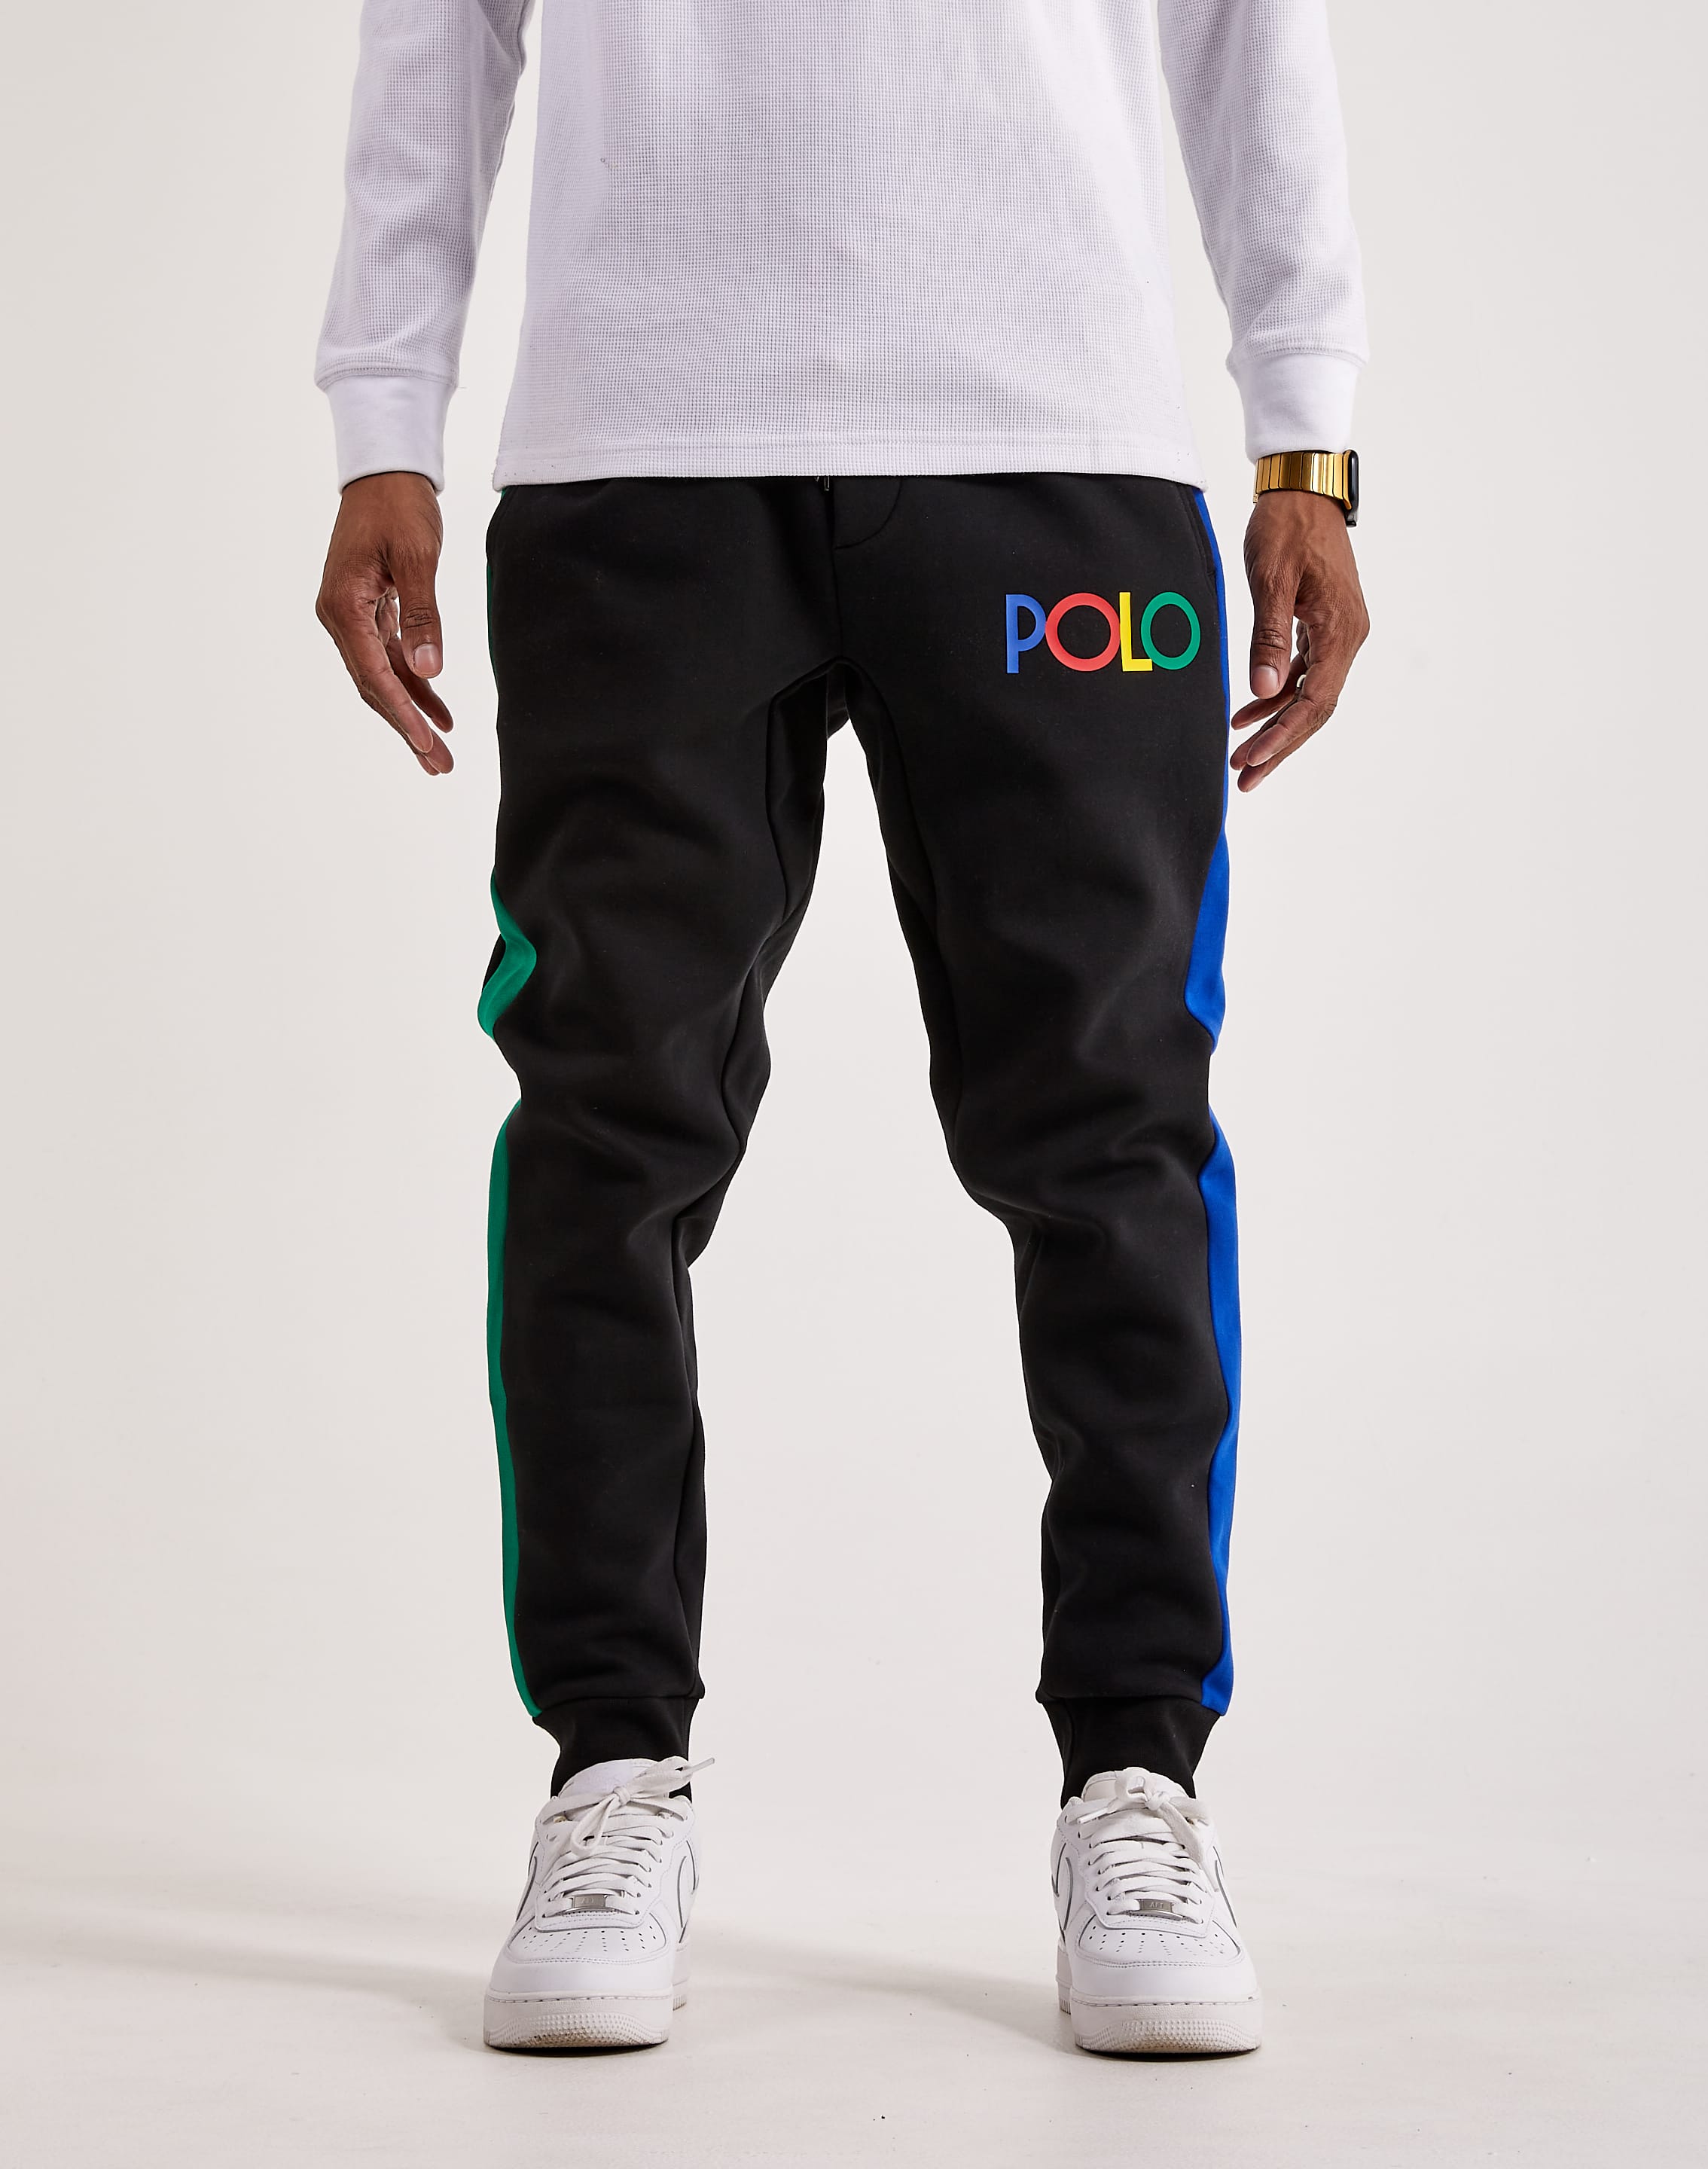 Polo Ralph Lauren player logo double tech joggers in black